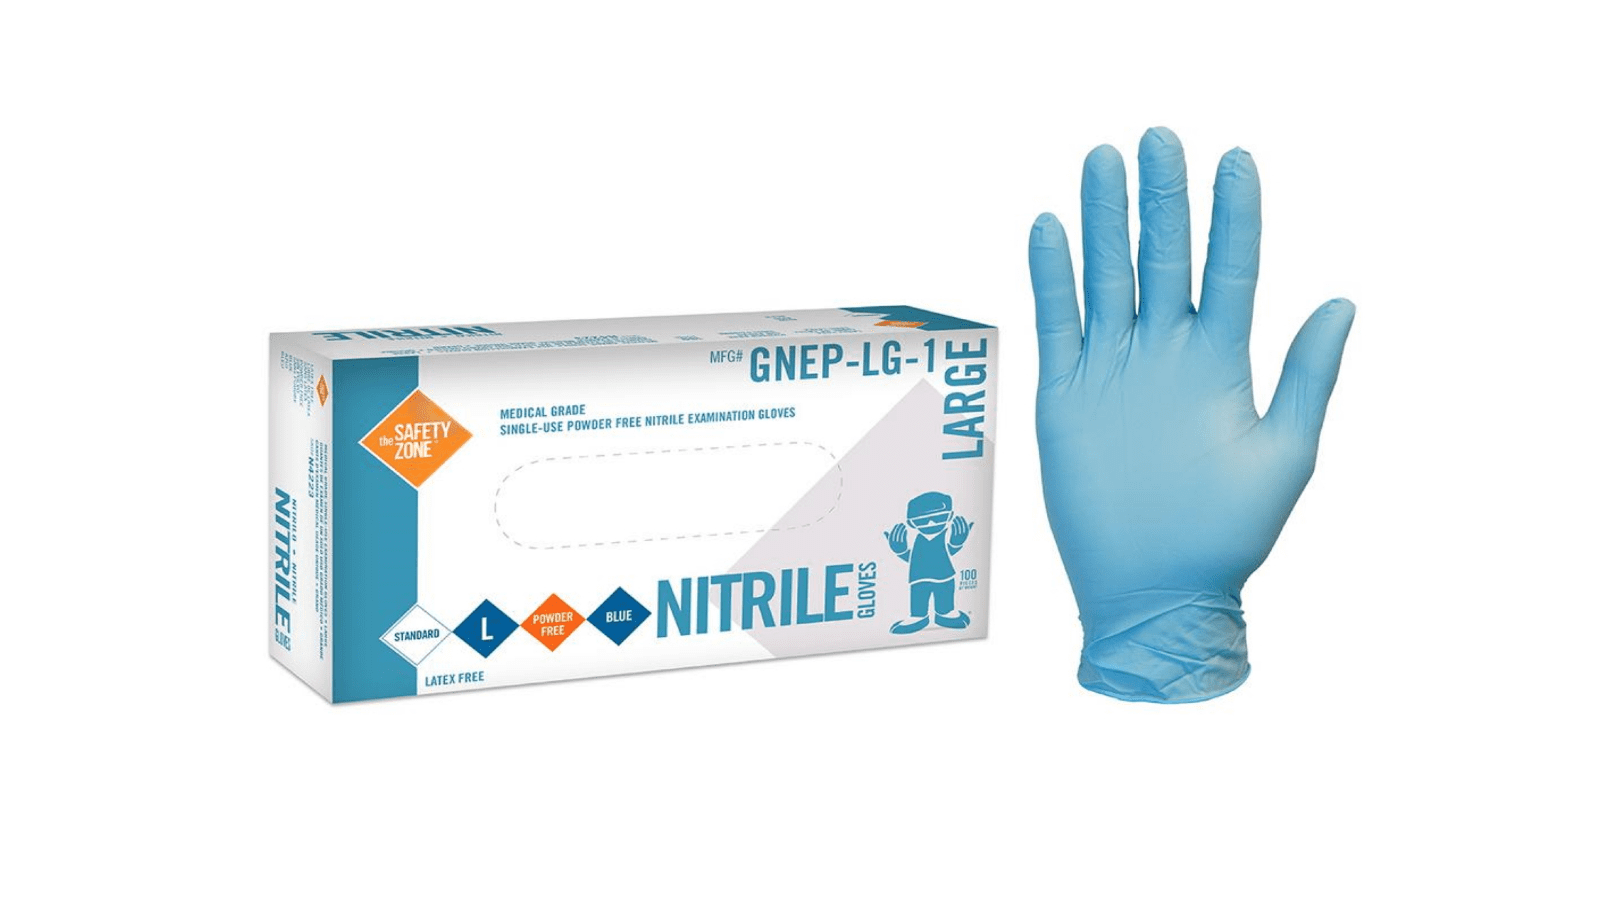 House brand premium nitrile exam gloves